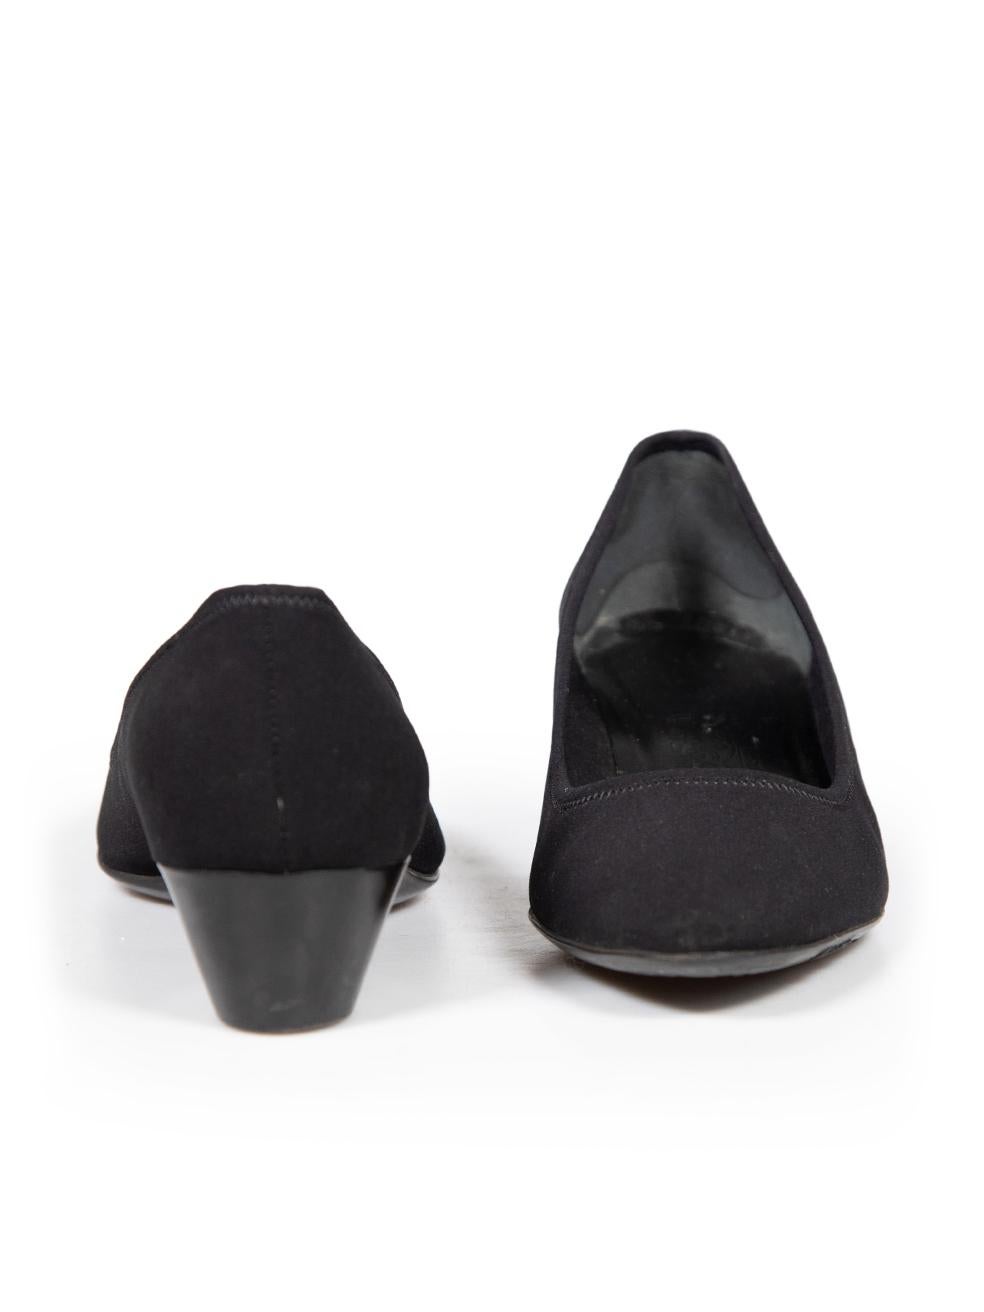 Salvatore Ferragamo Black Balmy Wedge Heel Size US 7.5 In Excellent Condition For Sale In London, GB